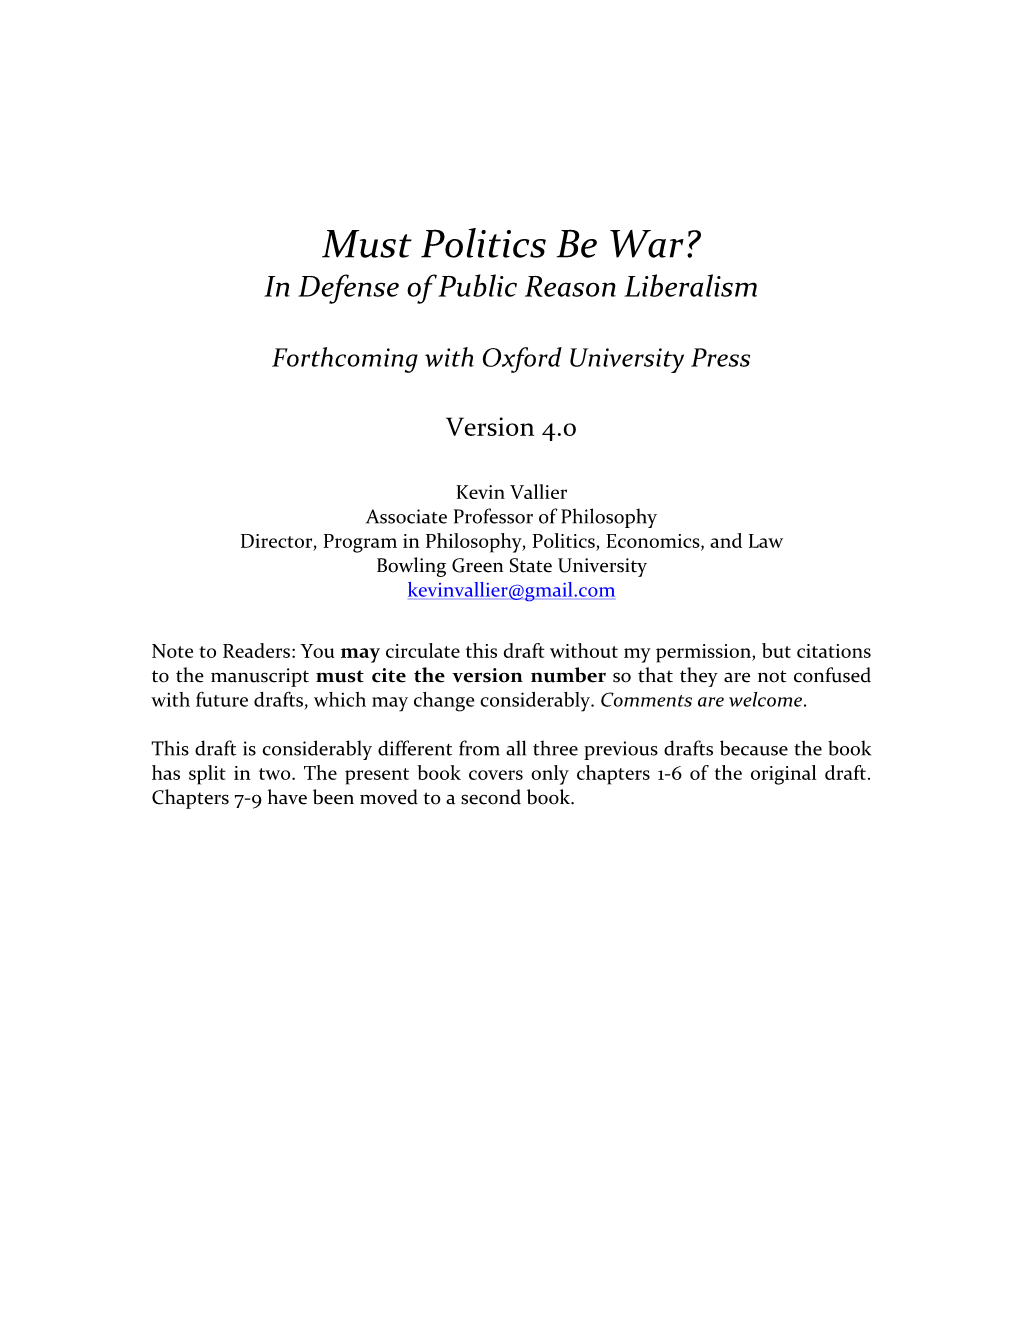 Must Politics Be War? in Defense of Public Reason Liberalism